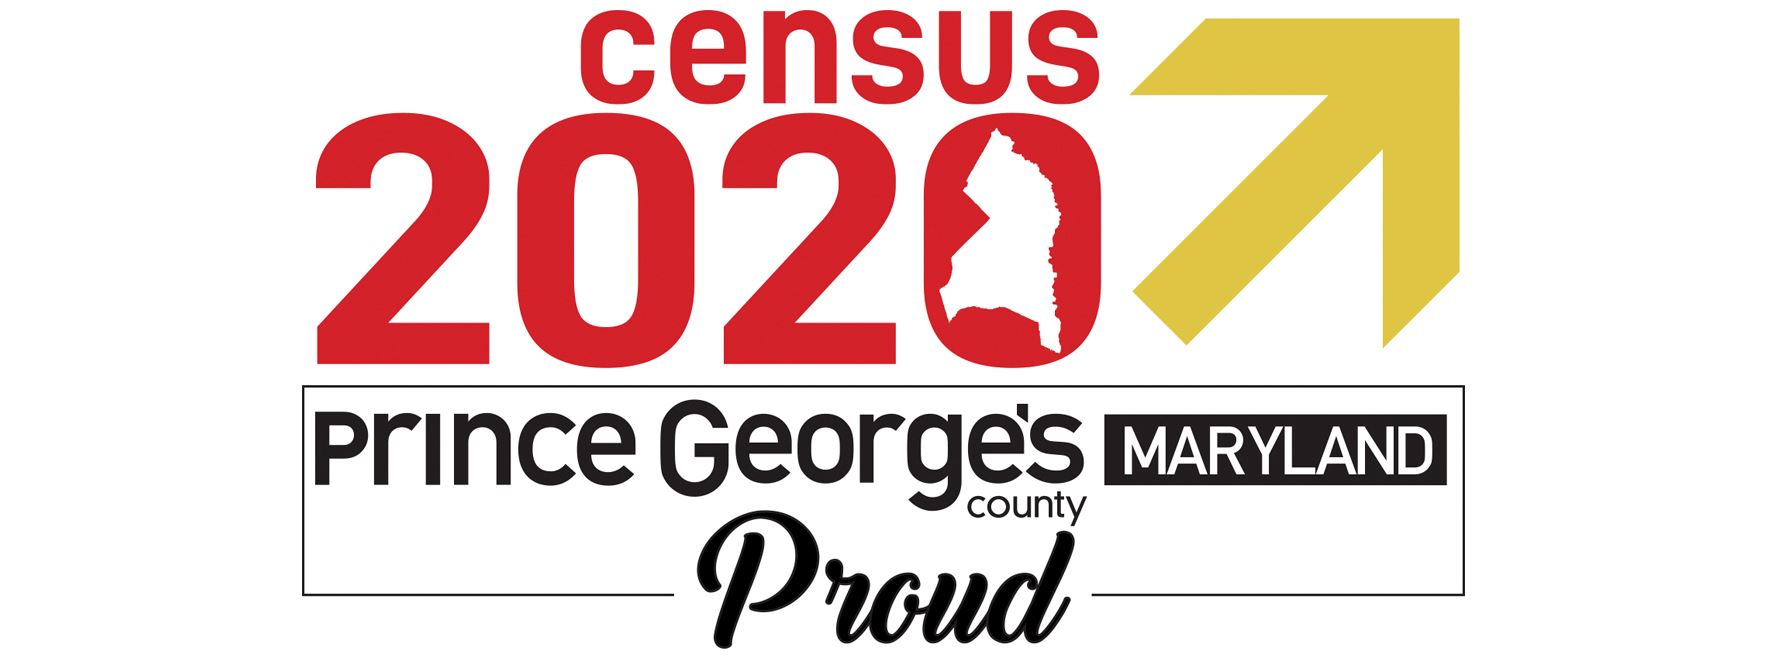 Census 2020 web banner